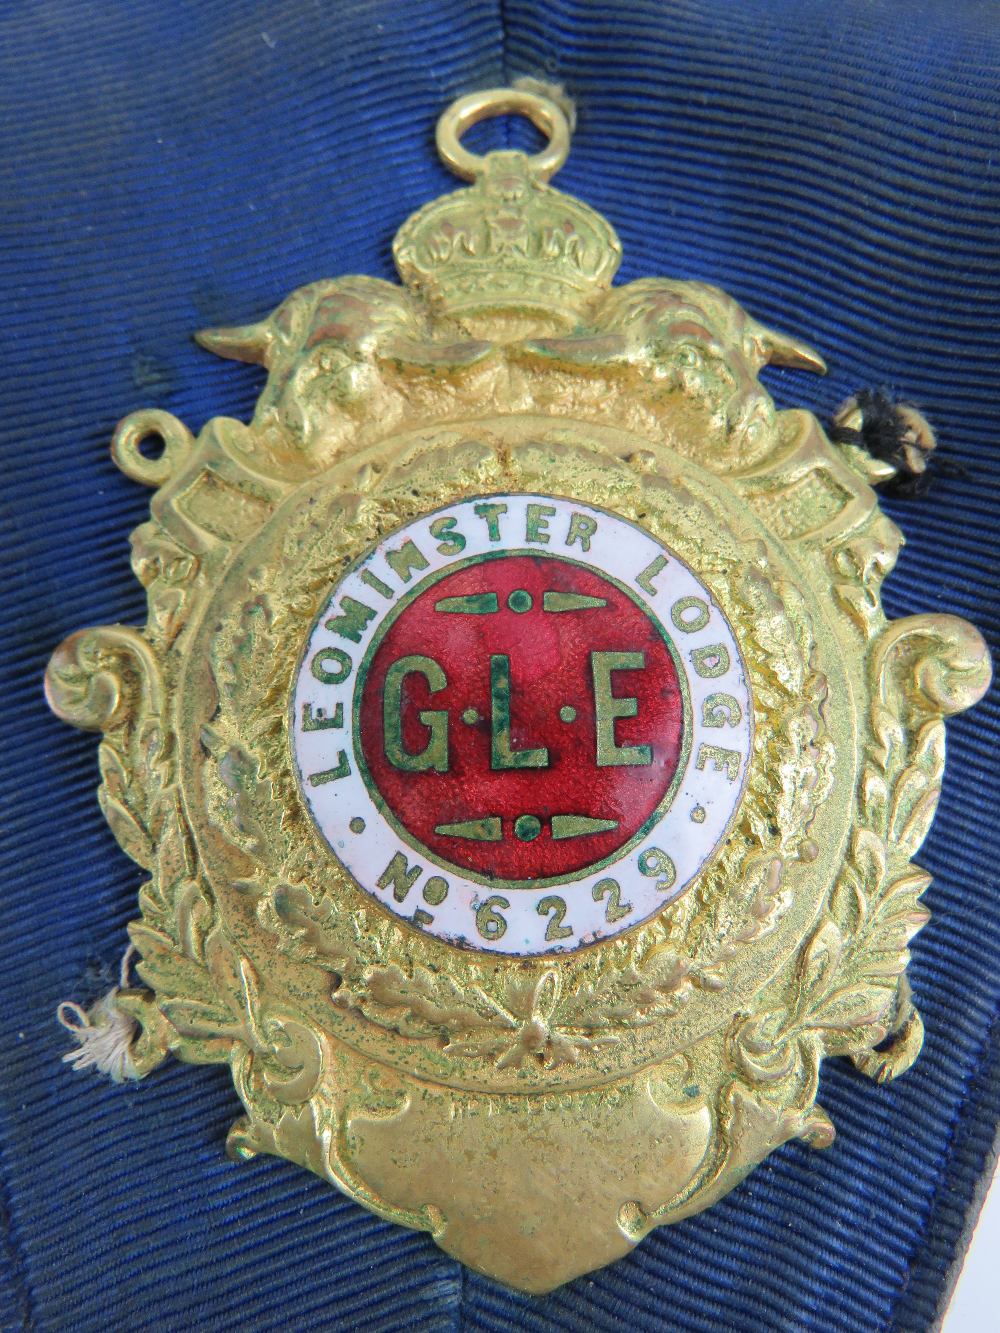 The Royal Antediluvian Order of Buffaloe - Image 2 of 4